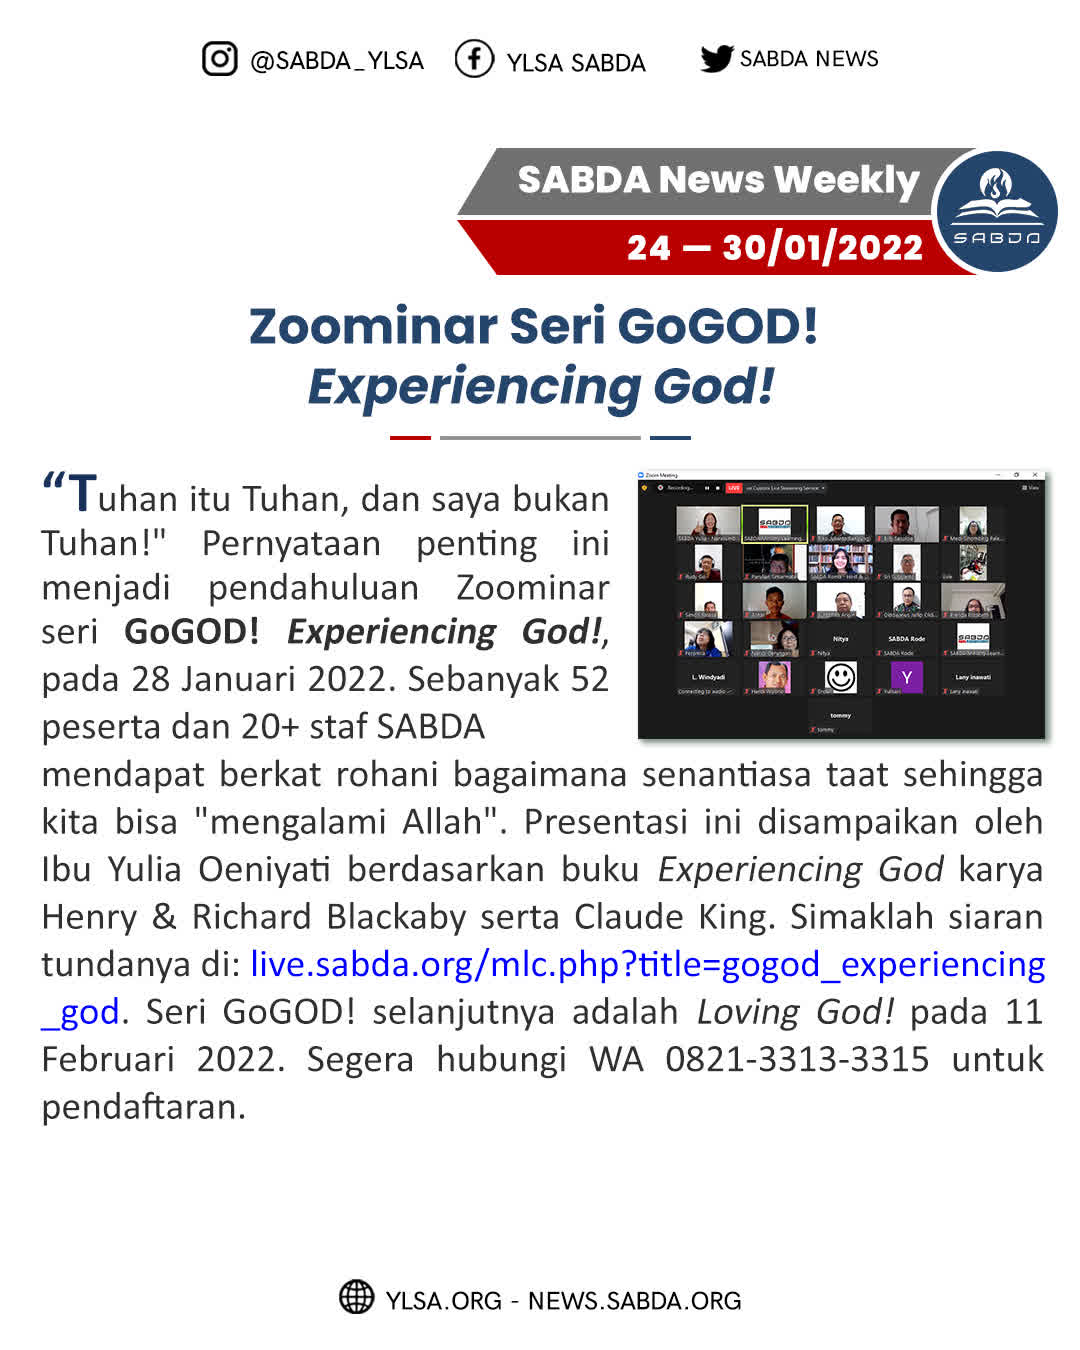 GoGOD: Experiencing GOD!